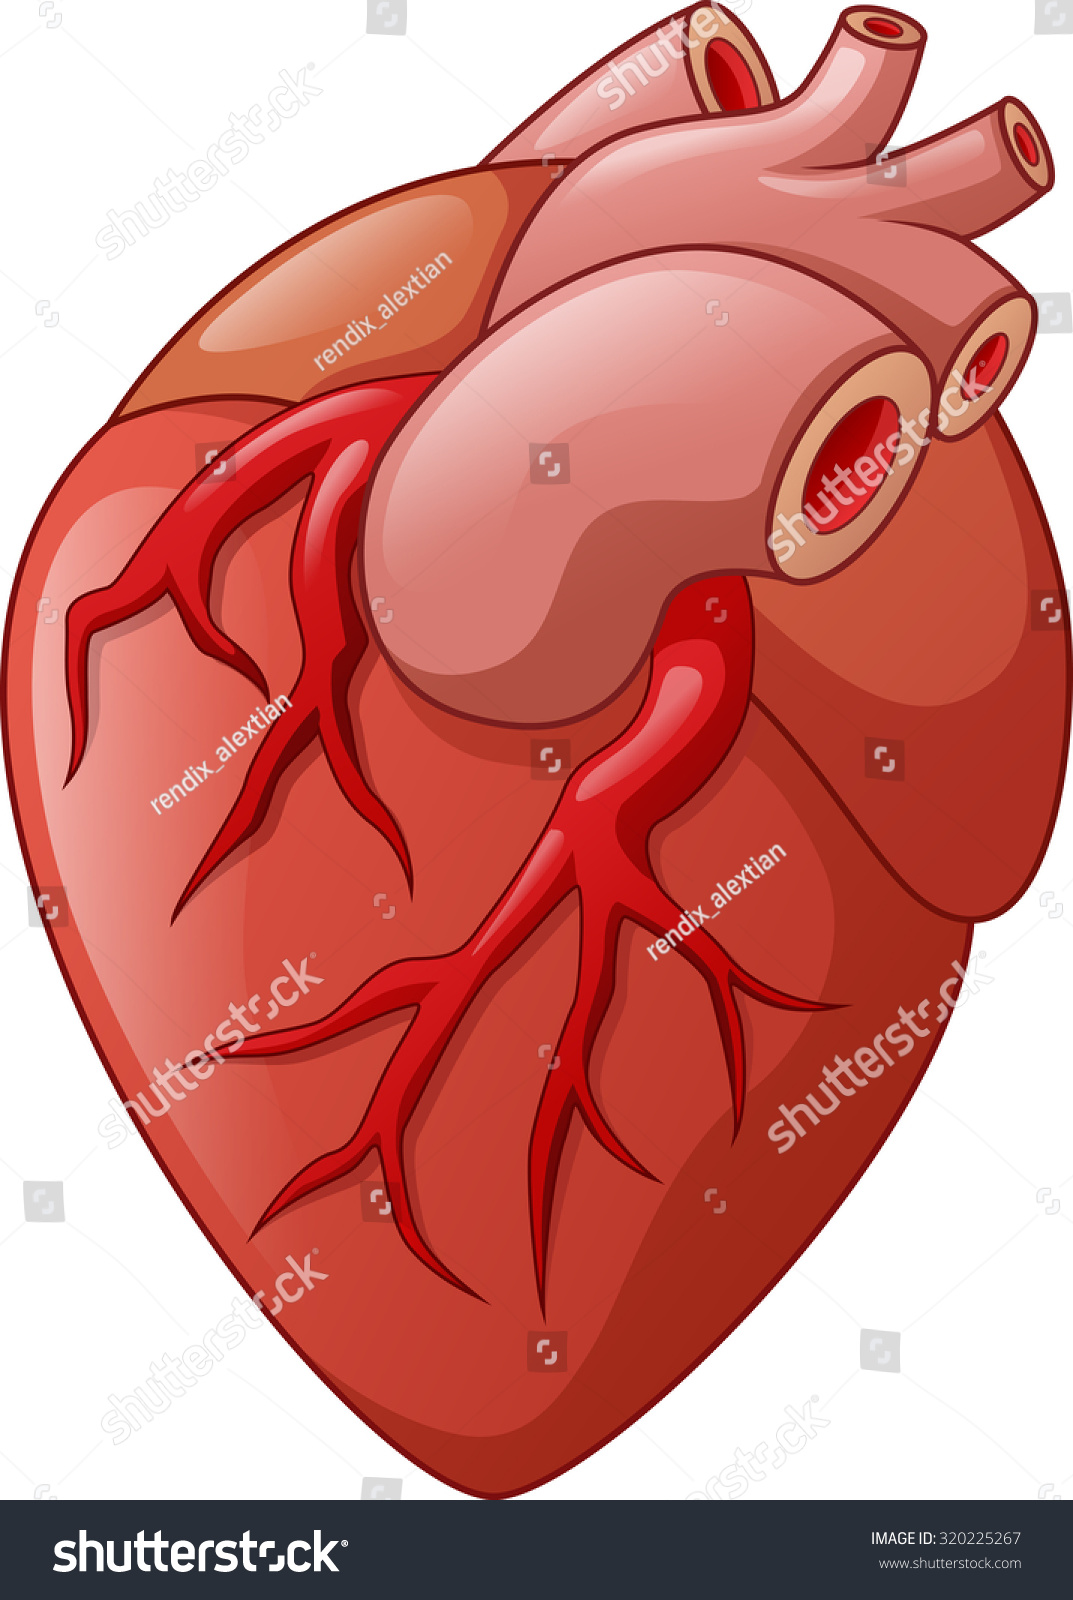 Human Heart Cartoon Illustration - 320225267 : Shutterstock